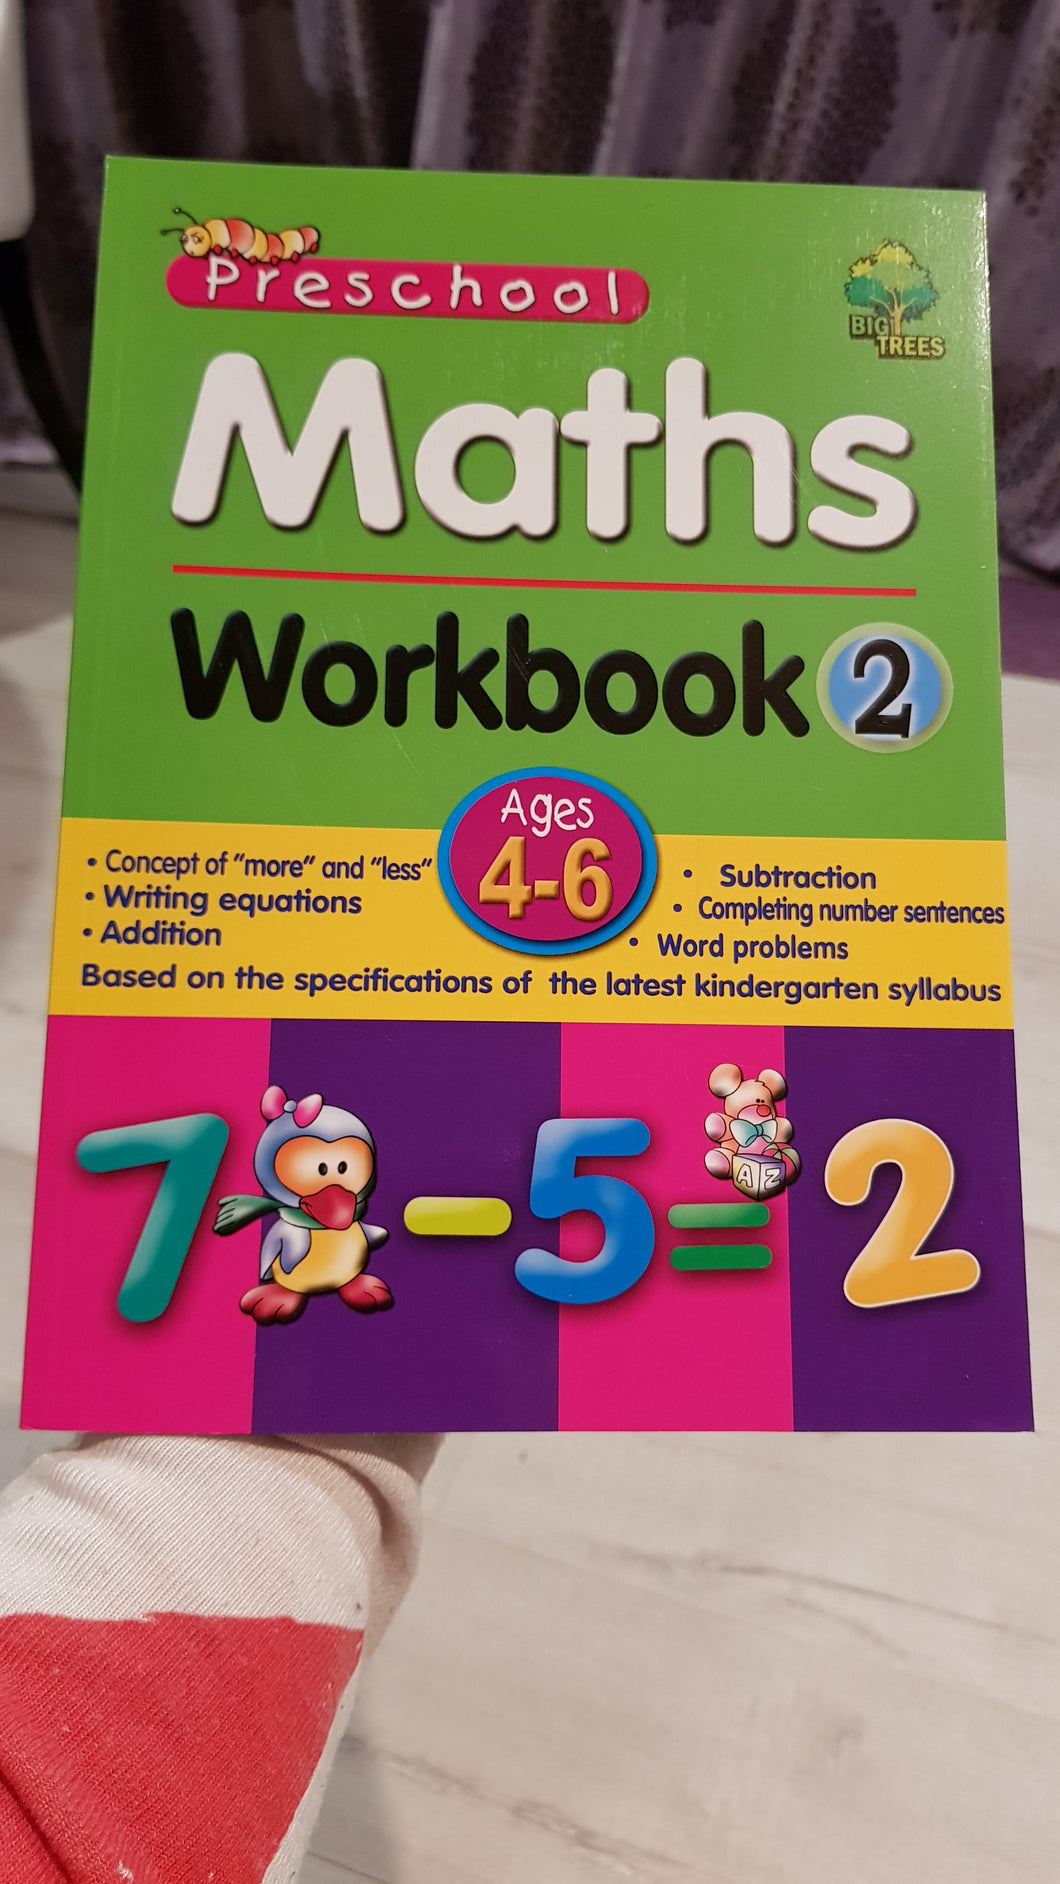 PRE-SCHOOL MATHS WORKBOOK 2 AGE 4-6